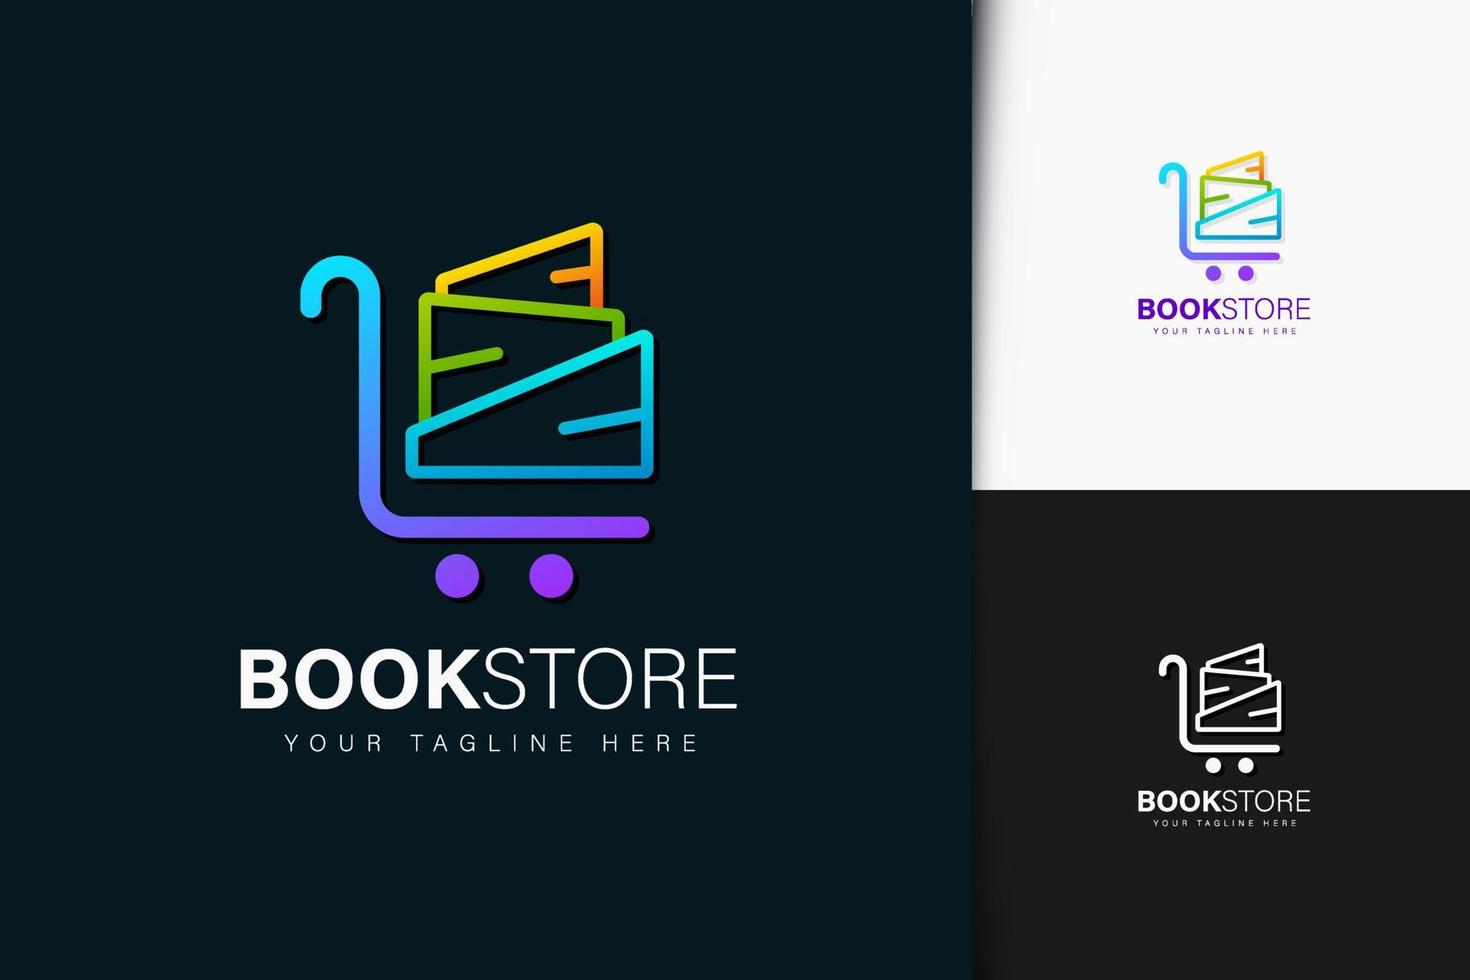 bokhandel logotyp design med gradient vektor